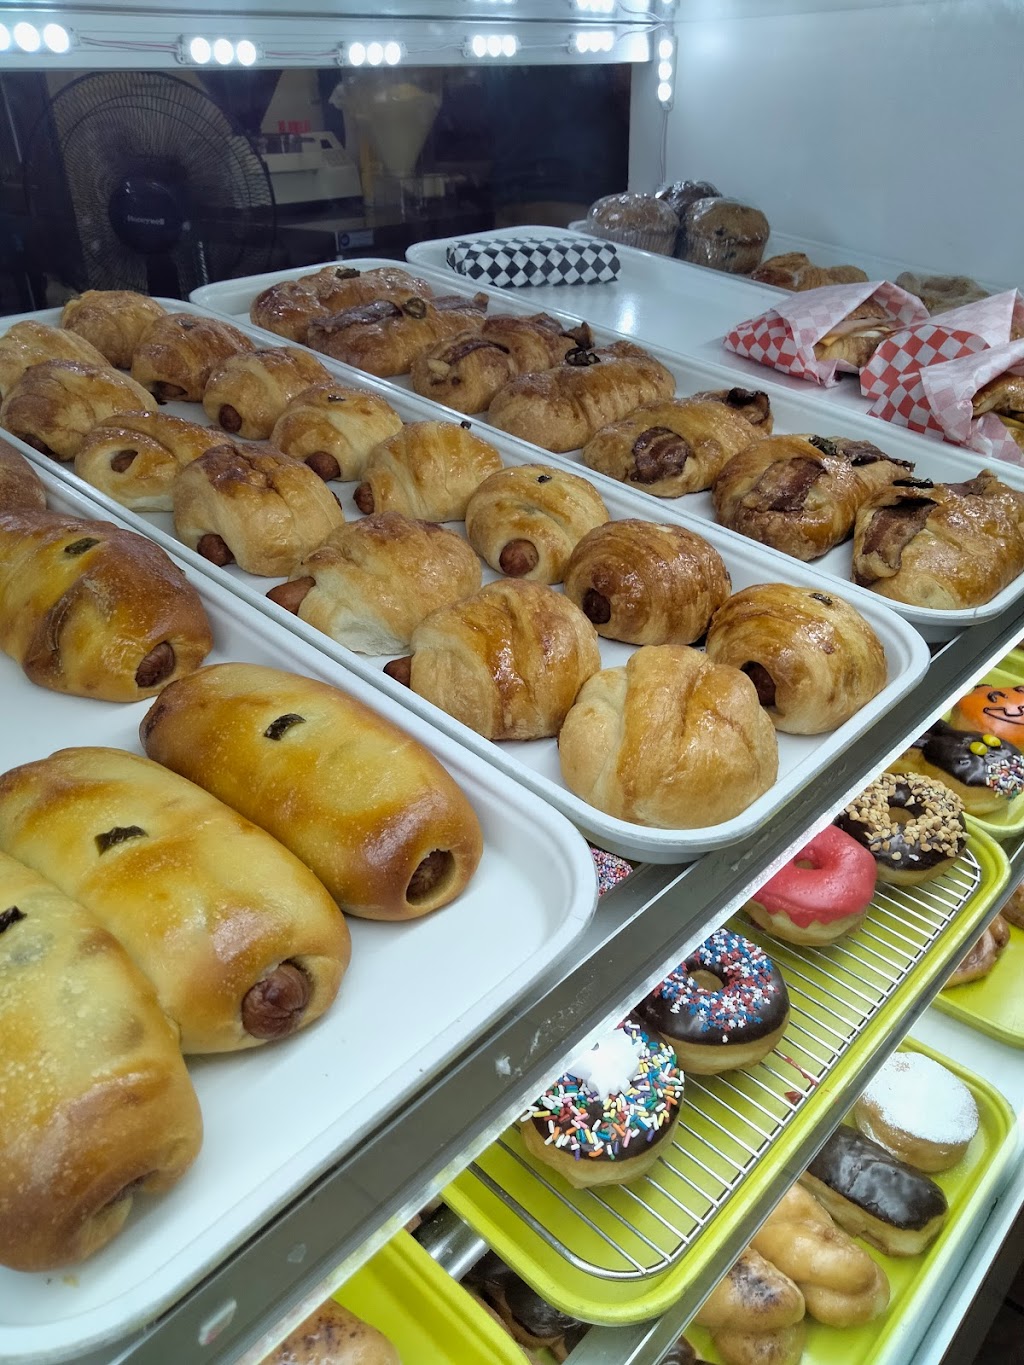 Amazing Donuts Bakery | 10355 Ferguson Rd #150, Dallas, TX 75228 | Phone: (214) 468-4240